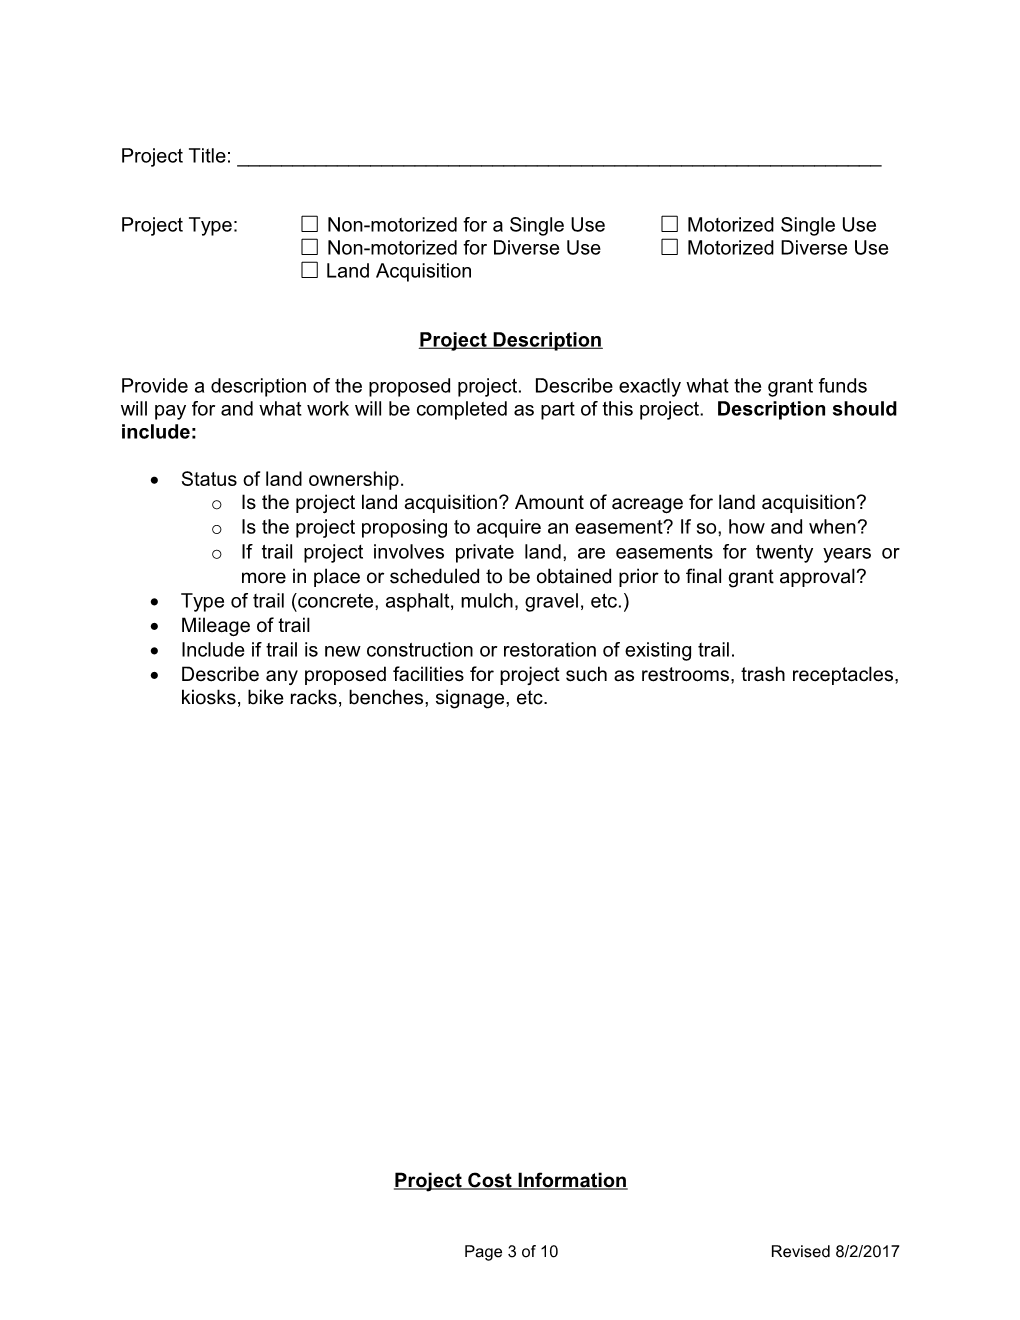 RTP Pre-Application Form